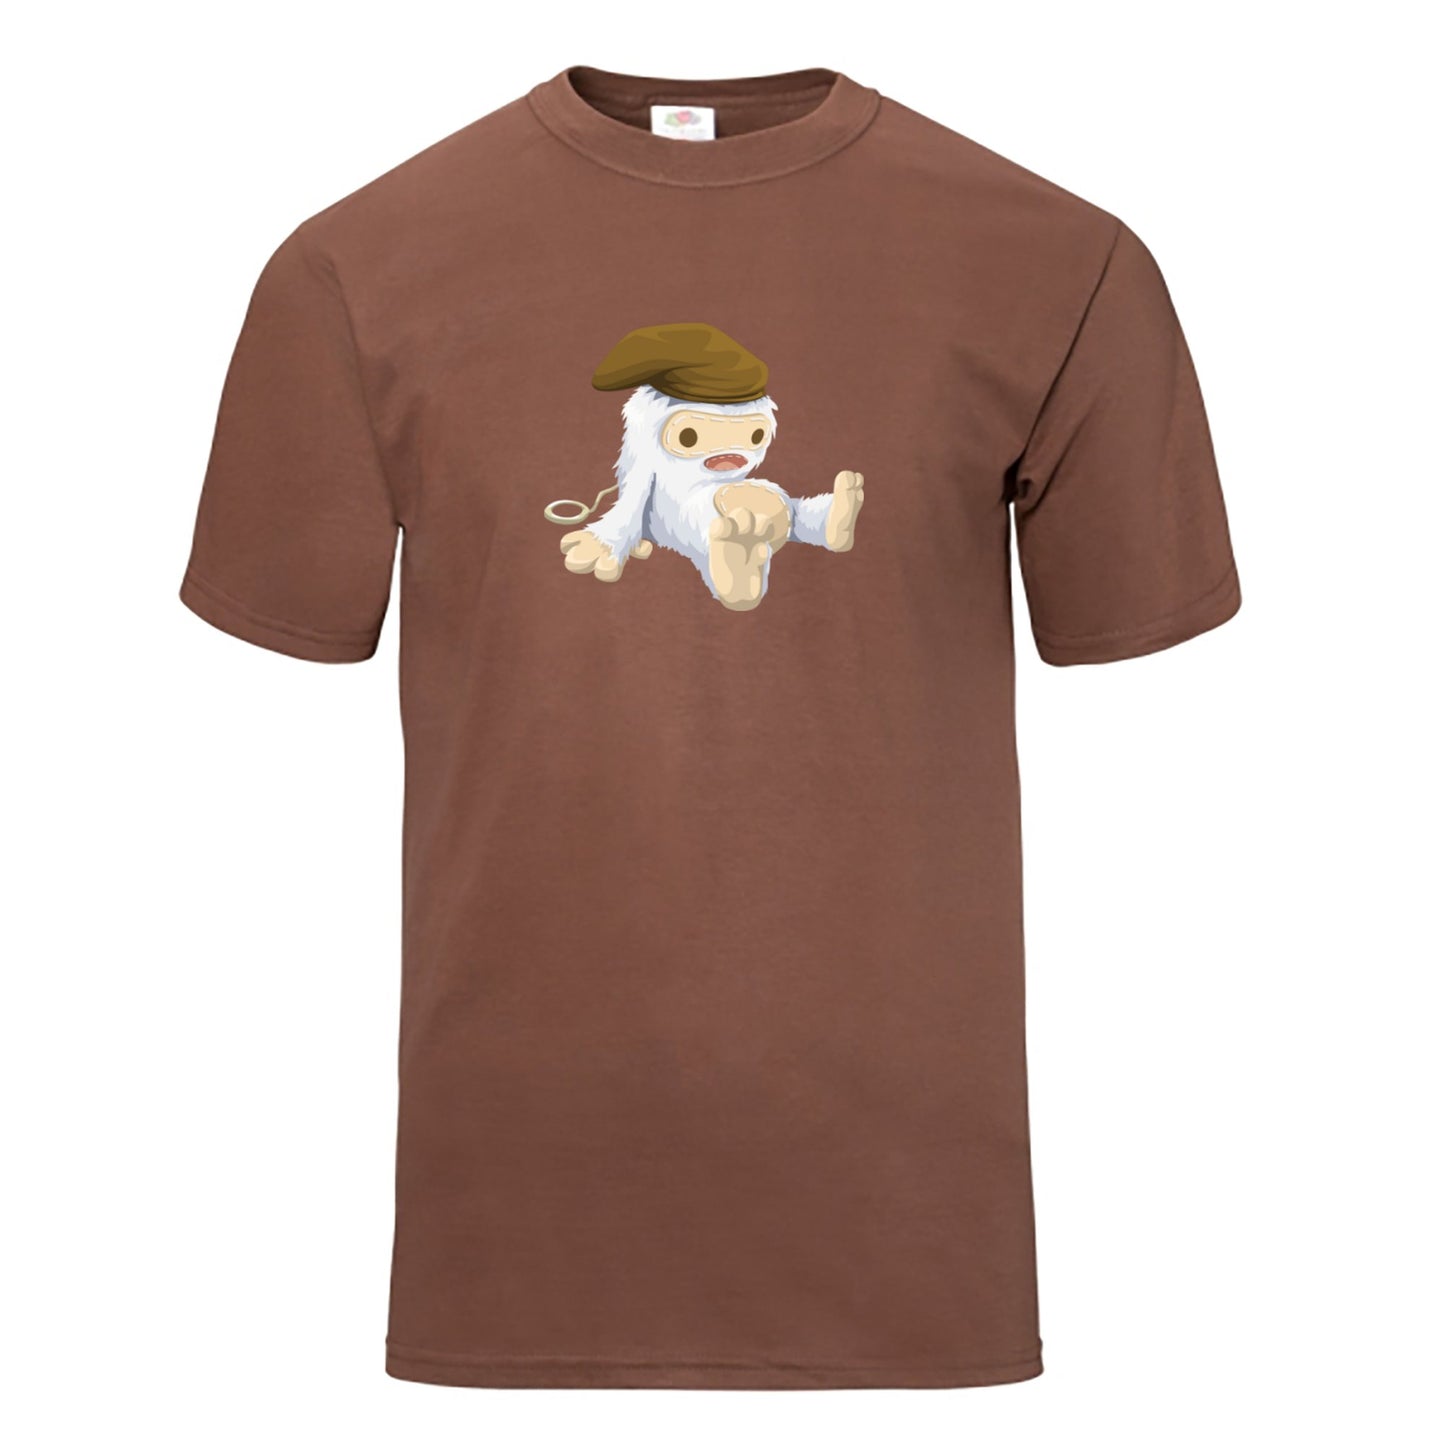 Yeti Plush Tee Shirt - Hypno Monkey